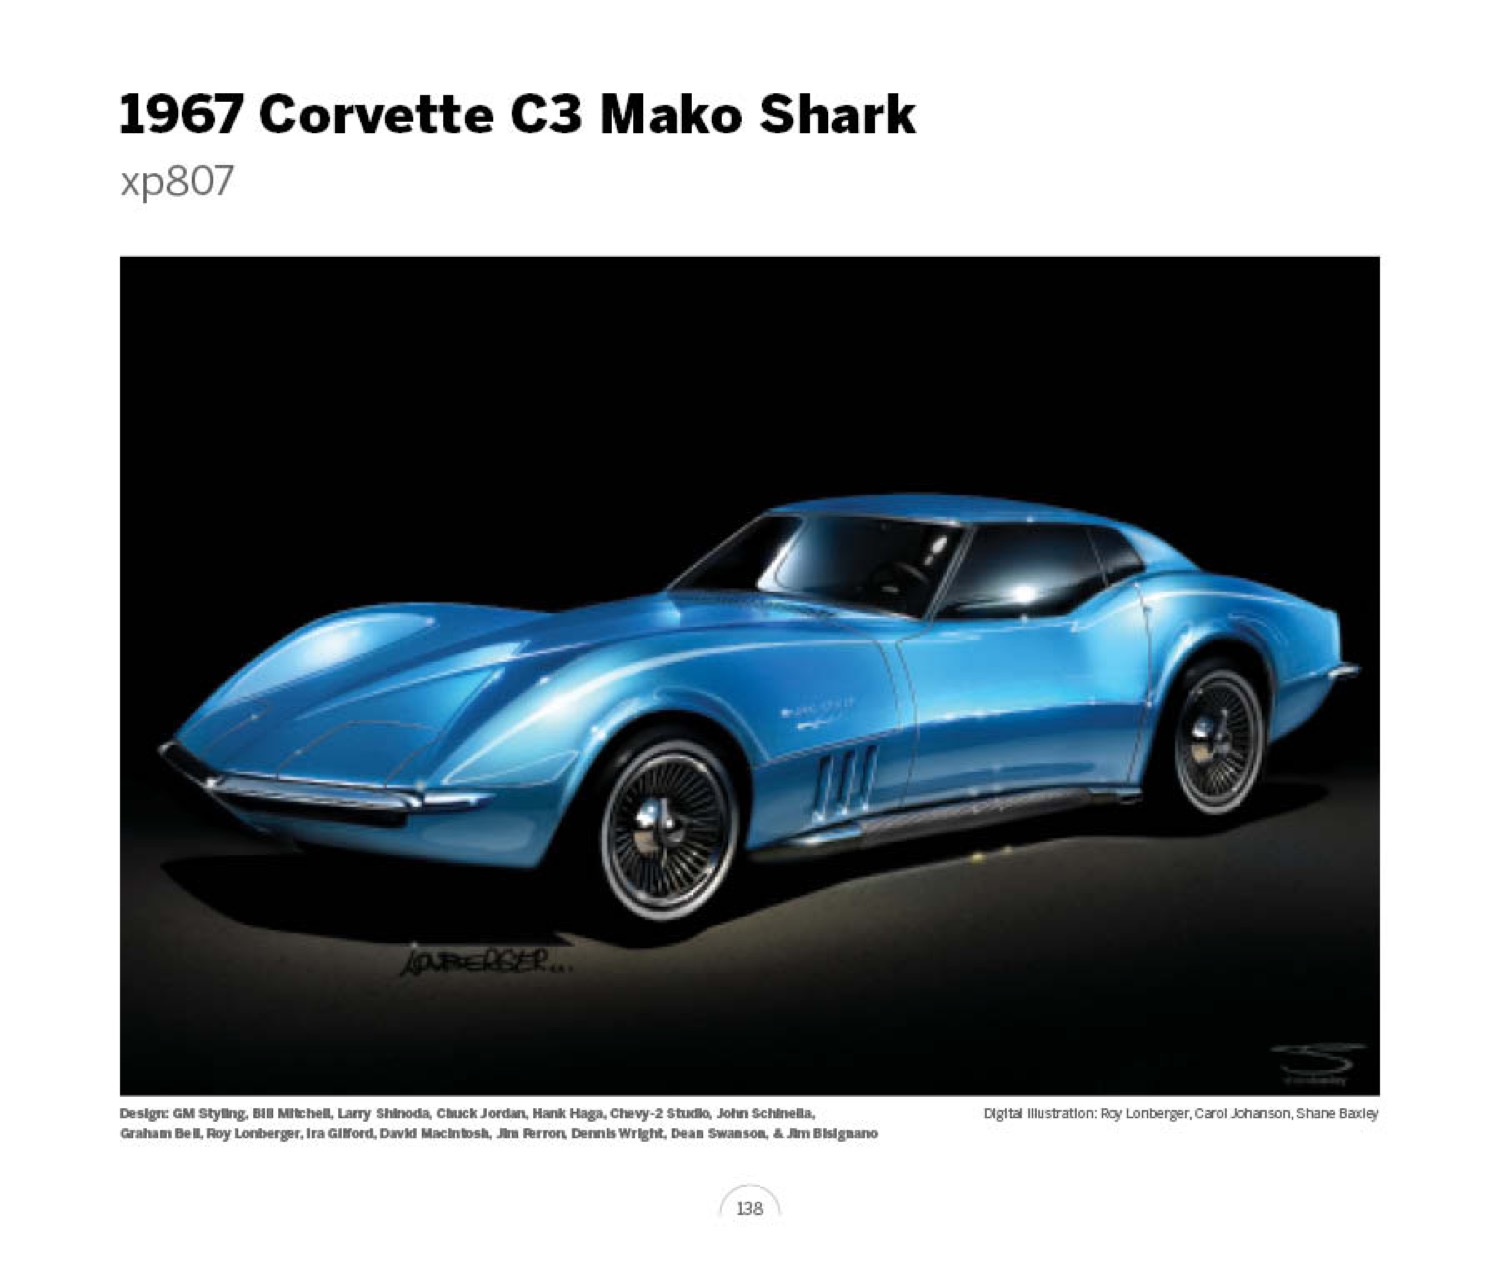 (12) 1967 Corvette C3 Mako Shark xp807 LoRez.jpg